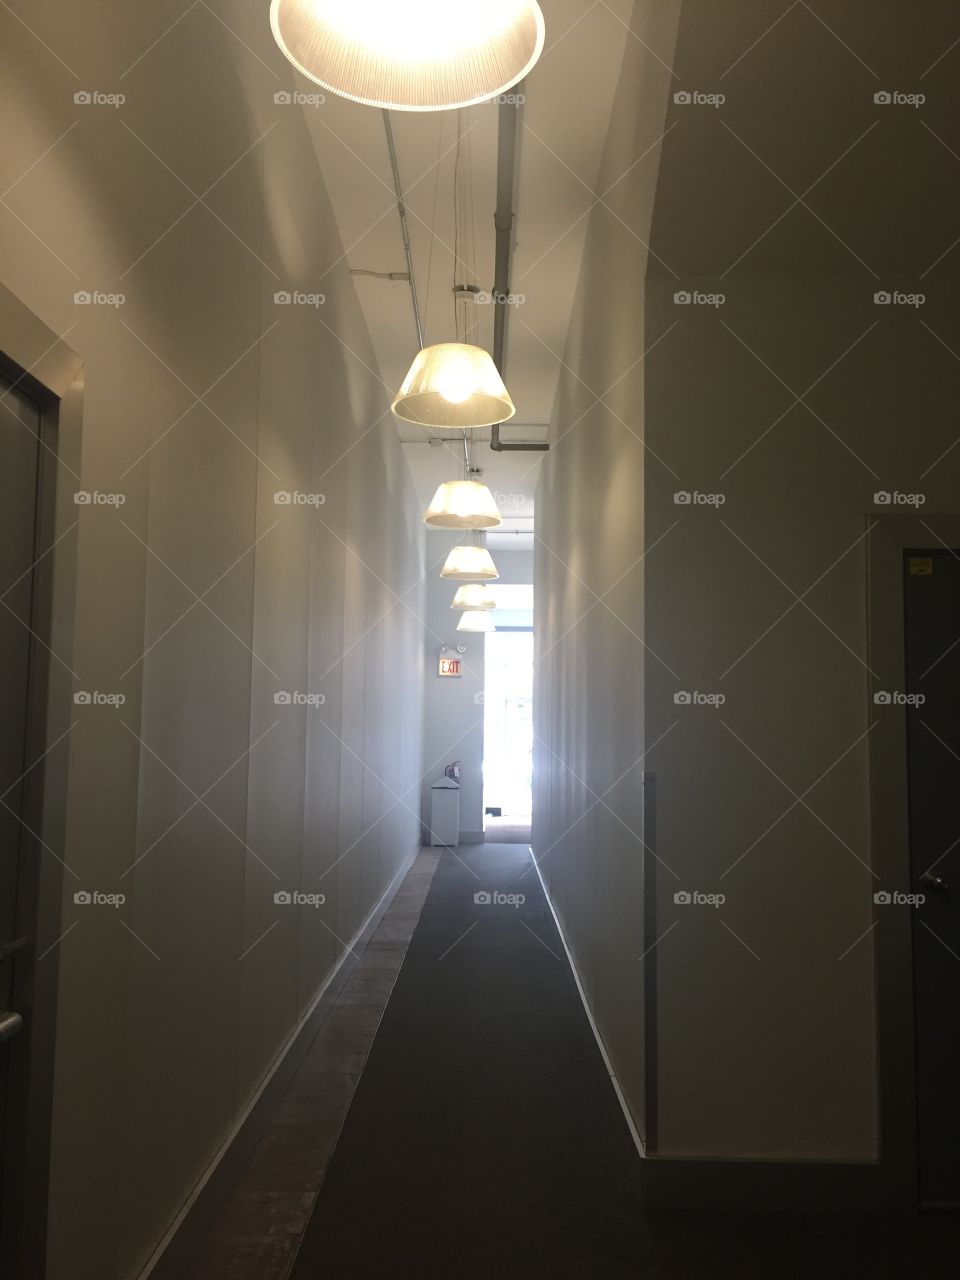 Lit Hallway